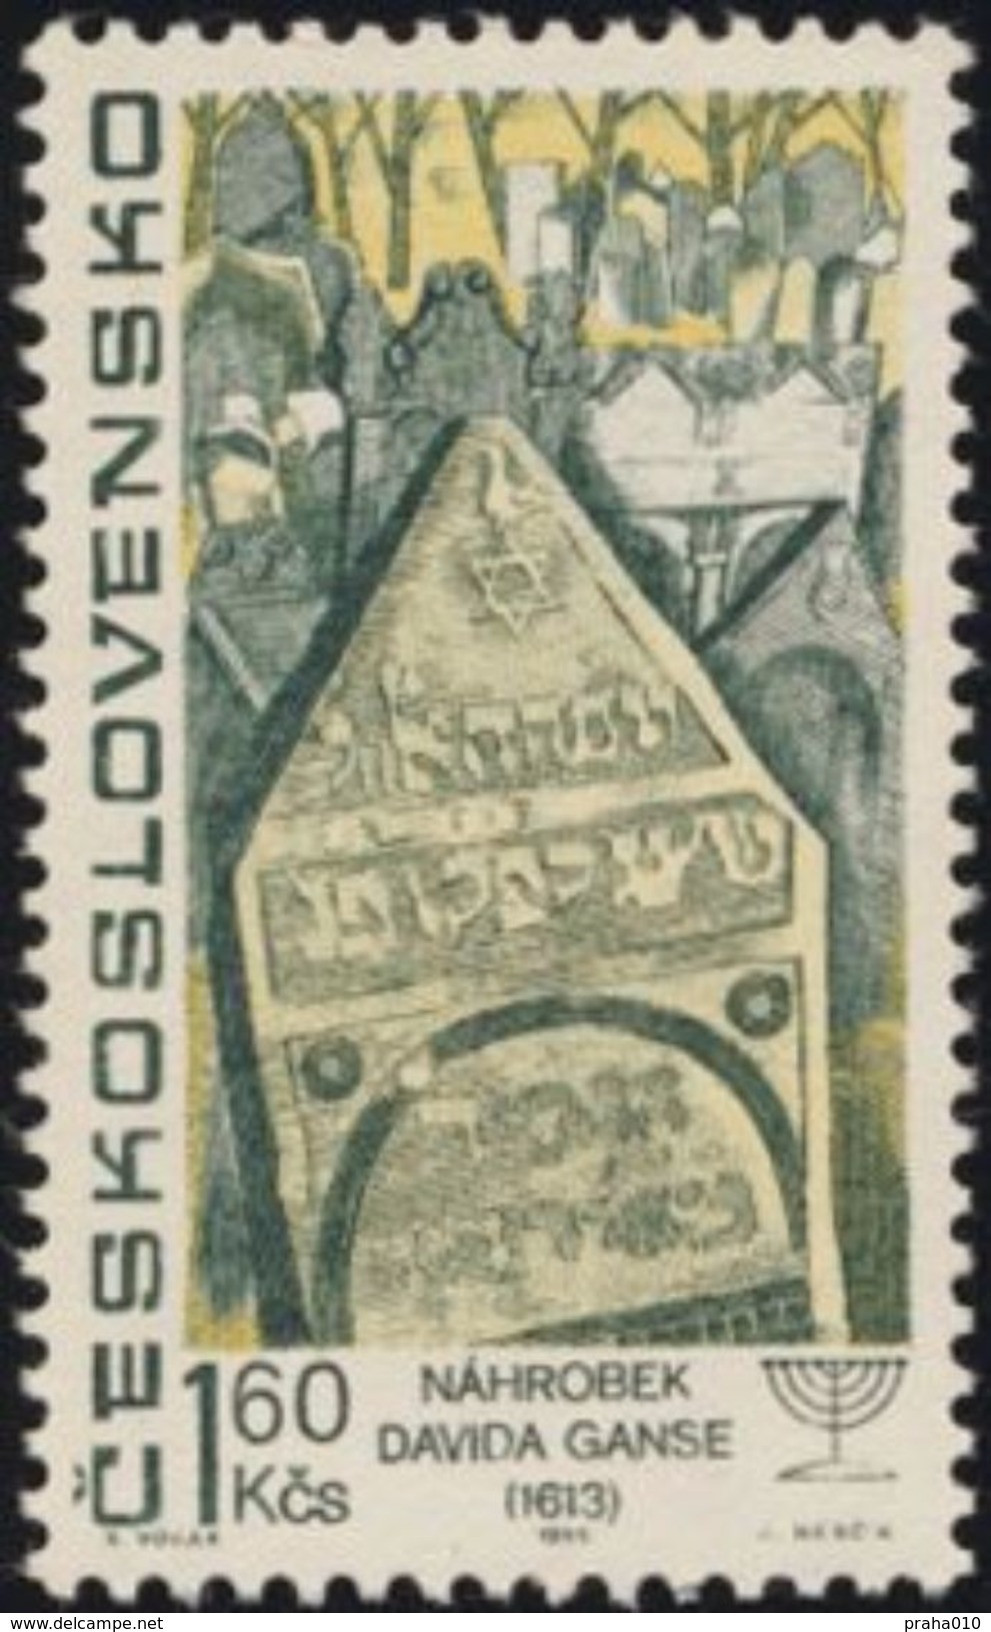 Czechoslovakia / Stamps (1967) 1620: Judaica - The Jewish Cemetery In Prague, Tombstone Of David Gans; Painter: K. Vodak - Jewish